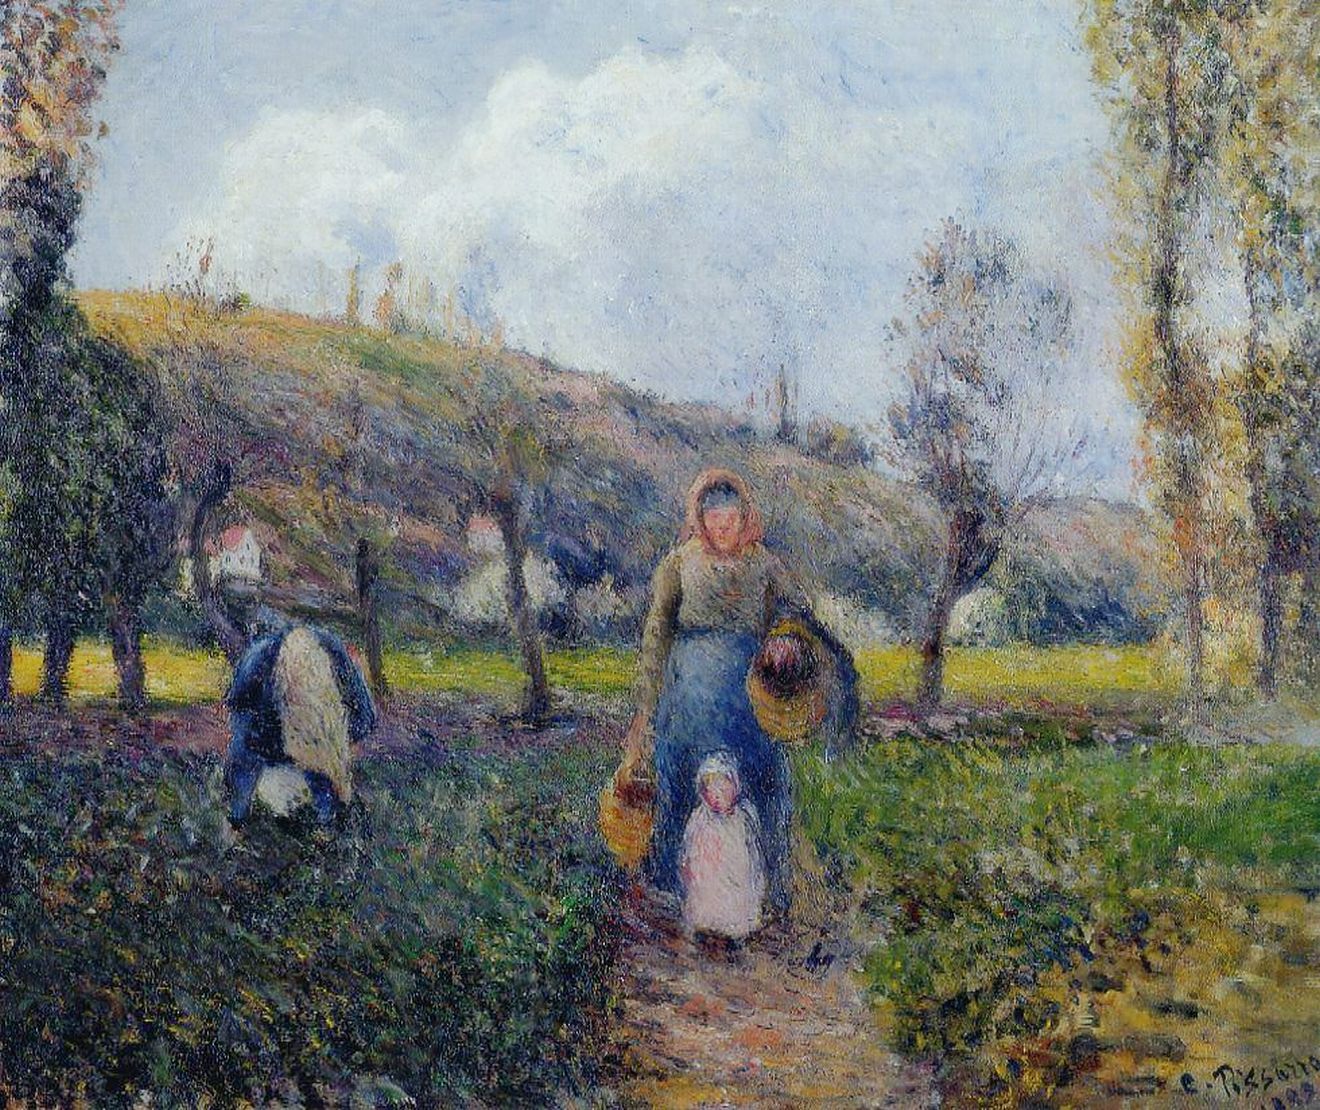 Camille+Pissarro-1830-1903 (330).jpg